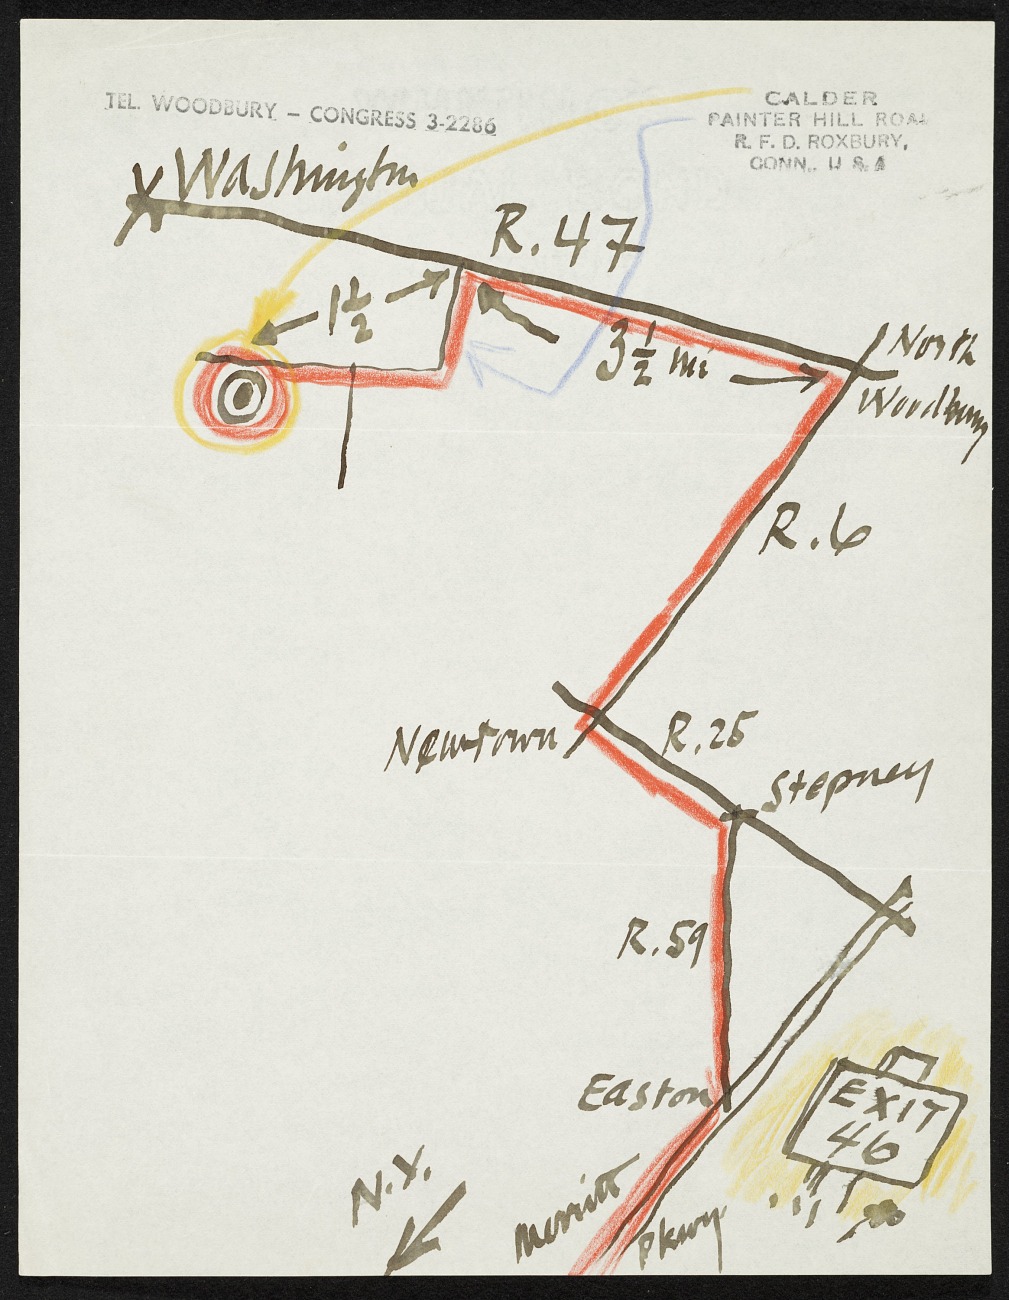 Alexander Calder, Roxbury, Connecticut letter to Ben Shahn, New York, New York, 1949 February 24